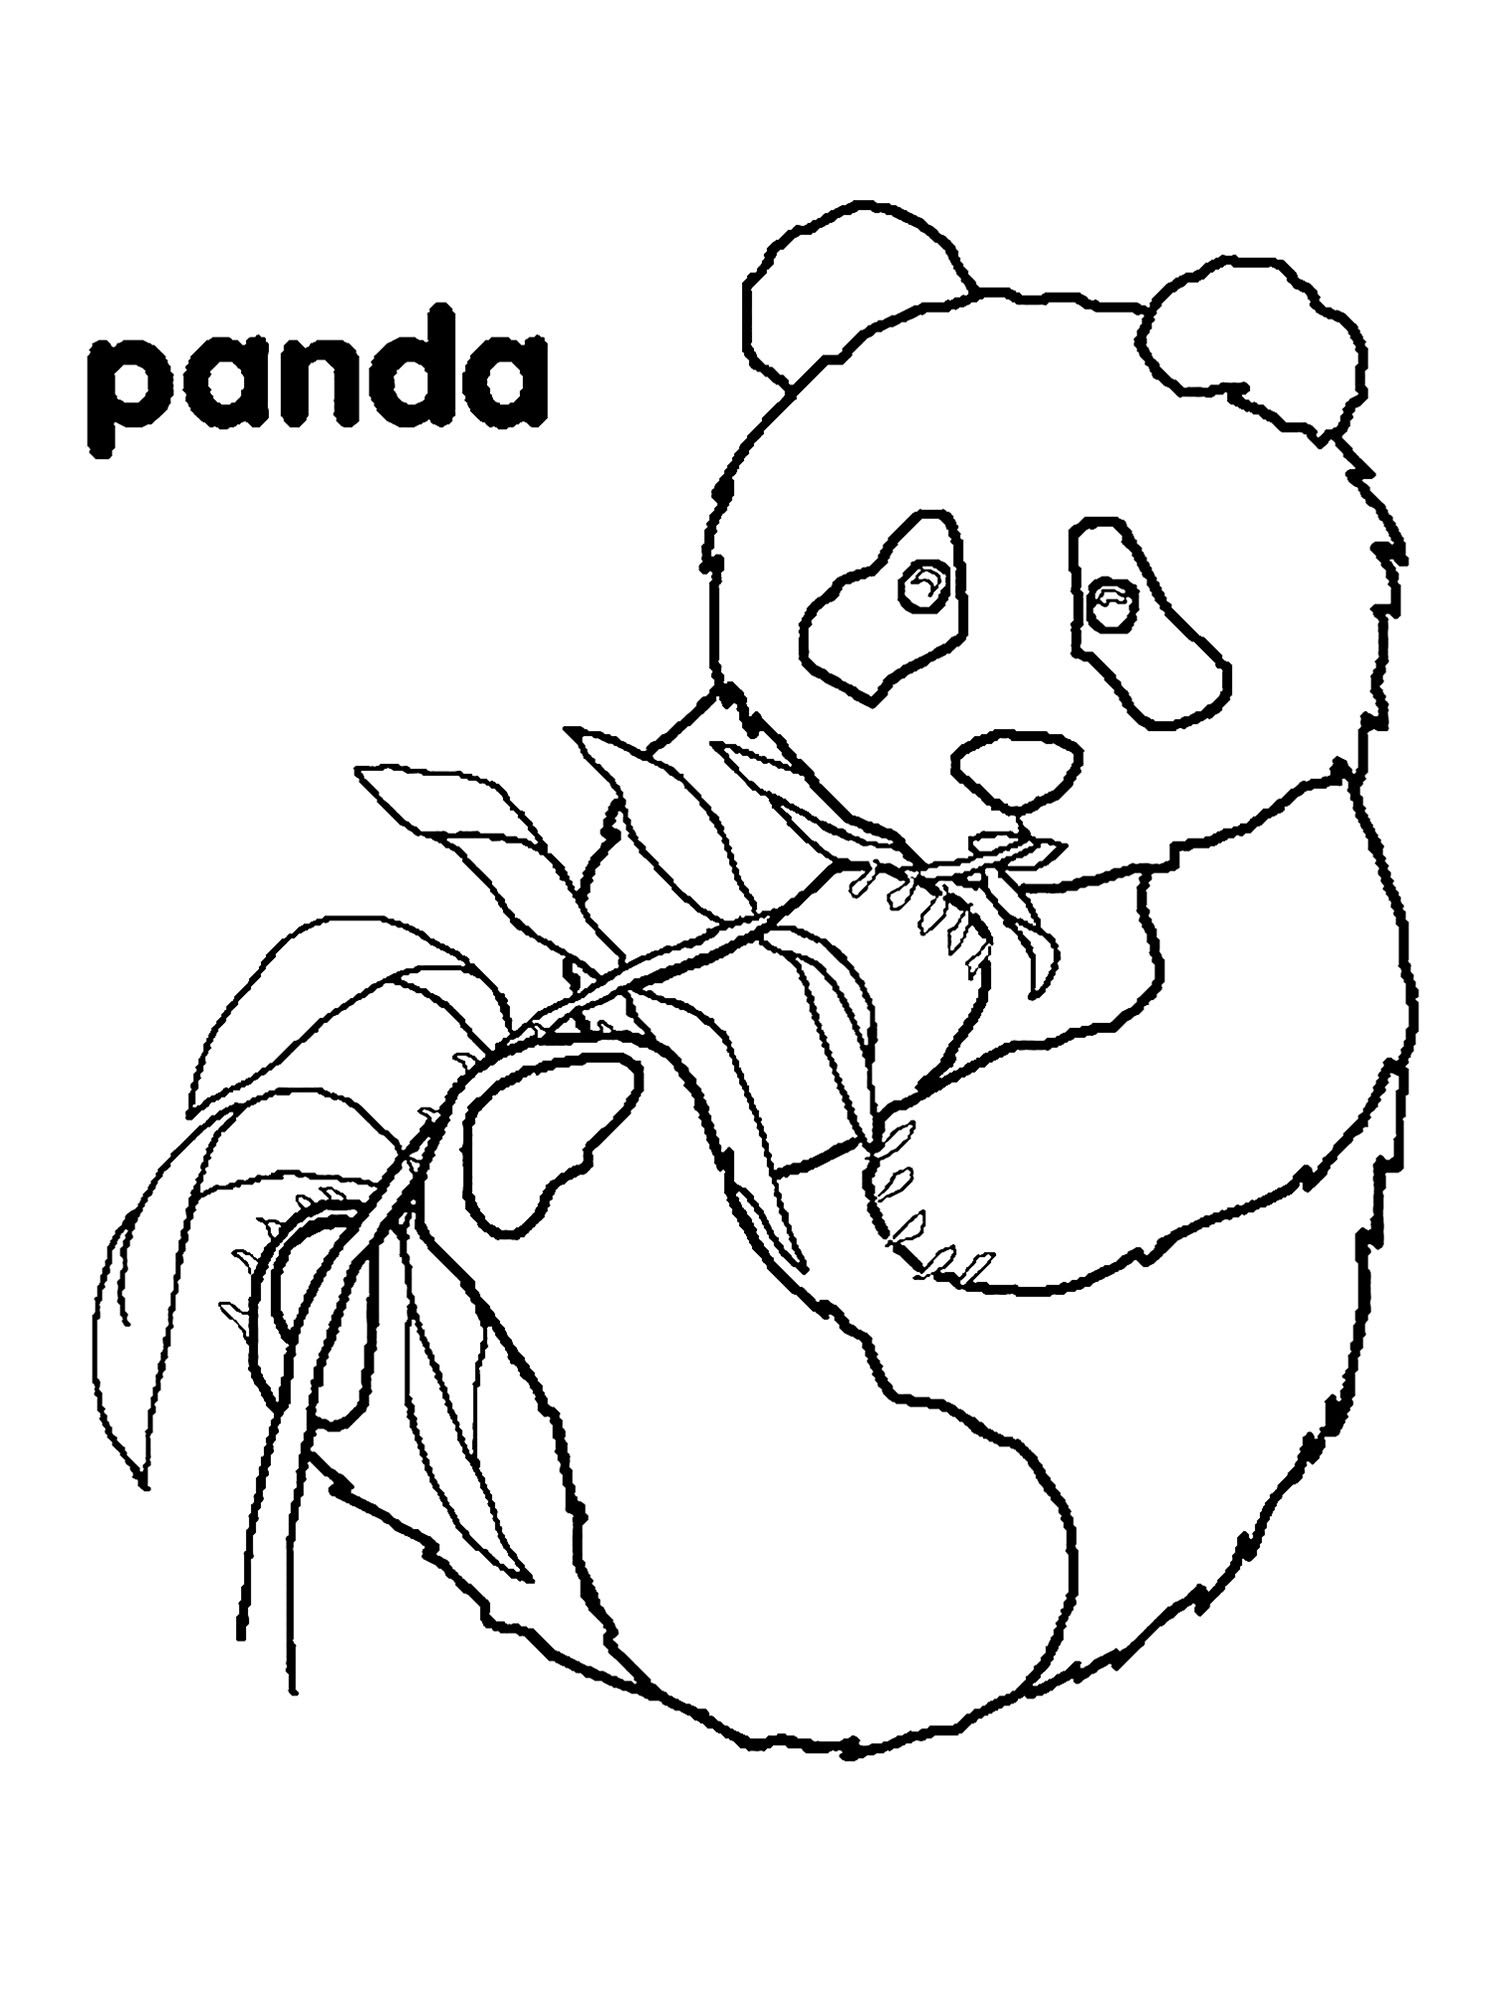 Worksheets : Pandas For Children Kids Coloring Printable